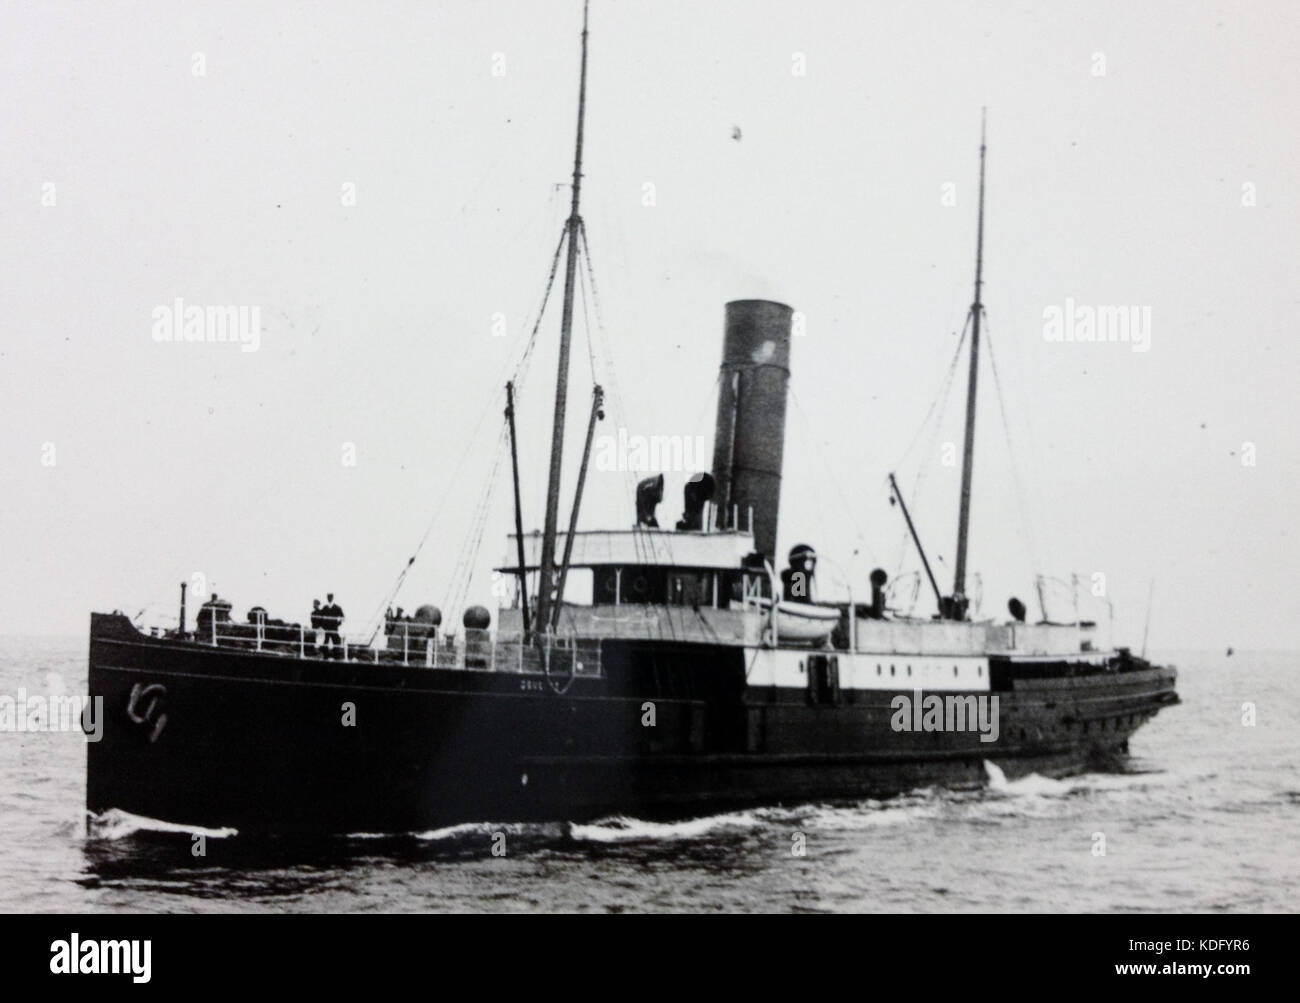 SS Douglas, approaching her home port, Douglas Stock Photo - Alamy